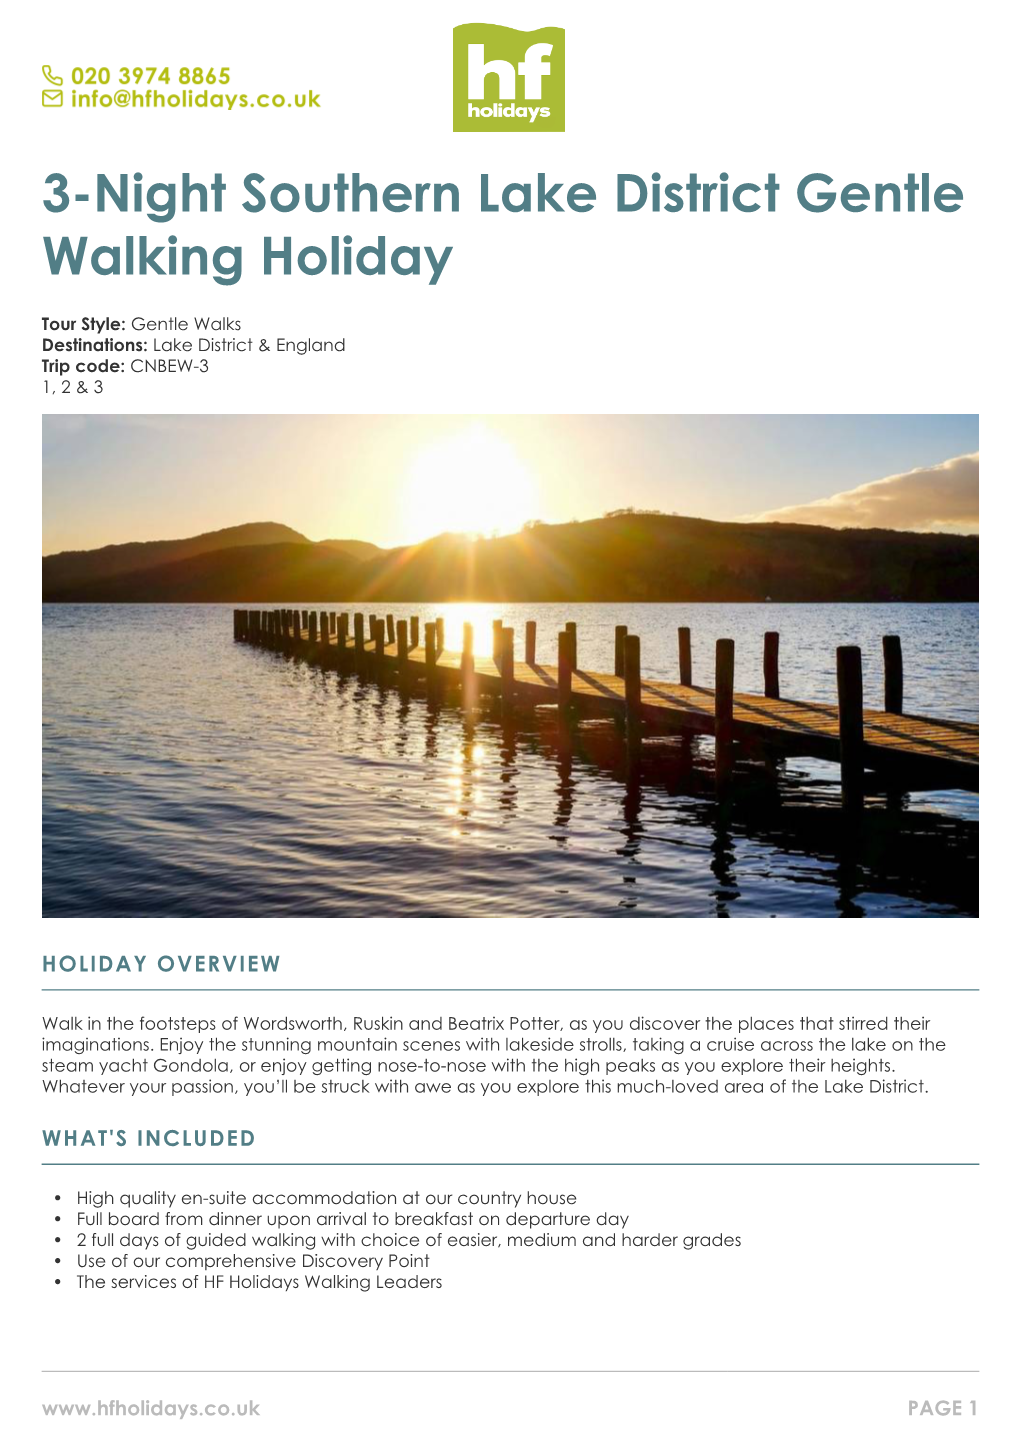 3-Night Southern Lake District Gentle Walking Holiday